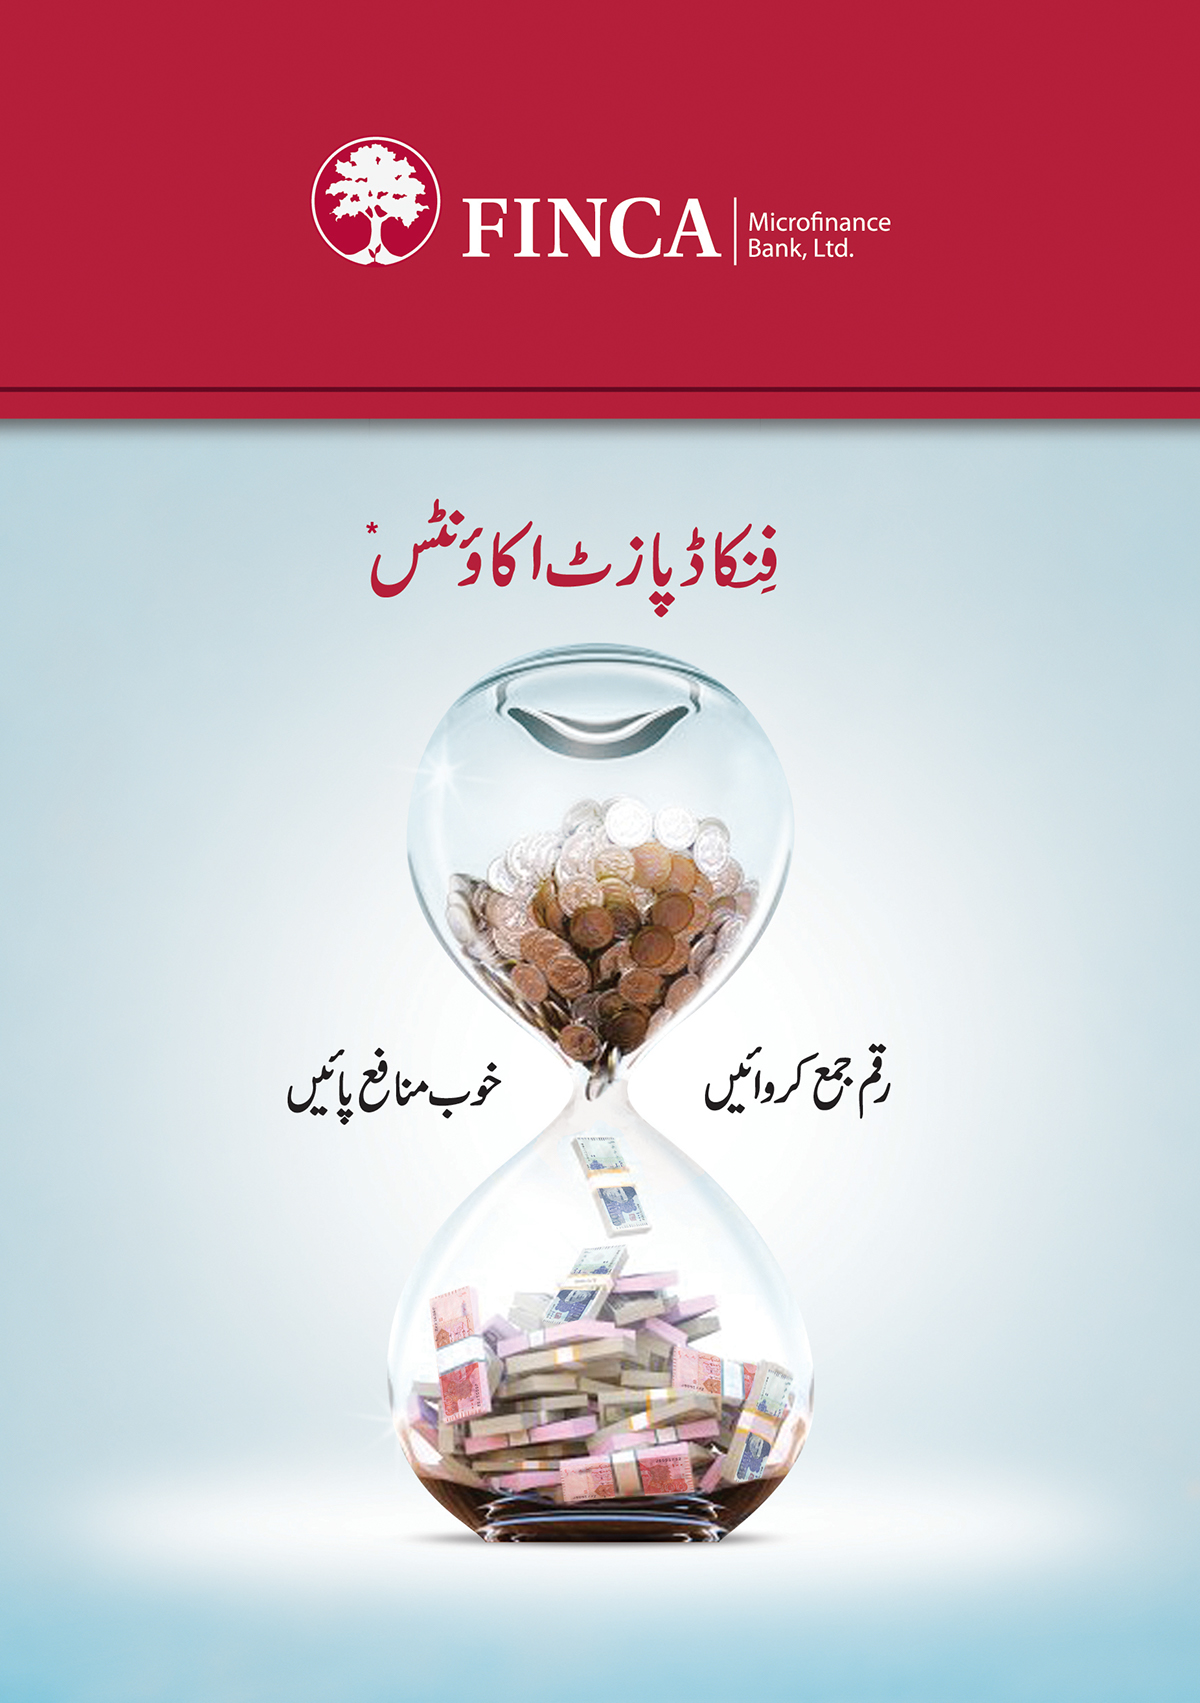 deposit ad finca ad money ads bank ads pakistan bank ads